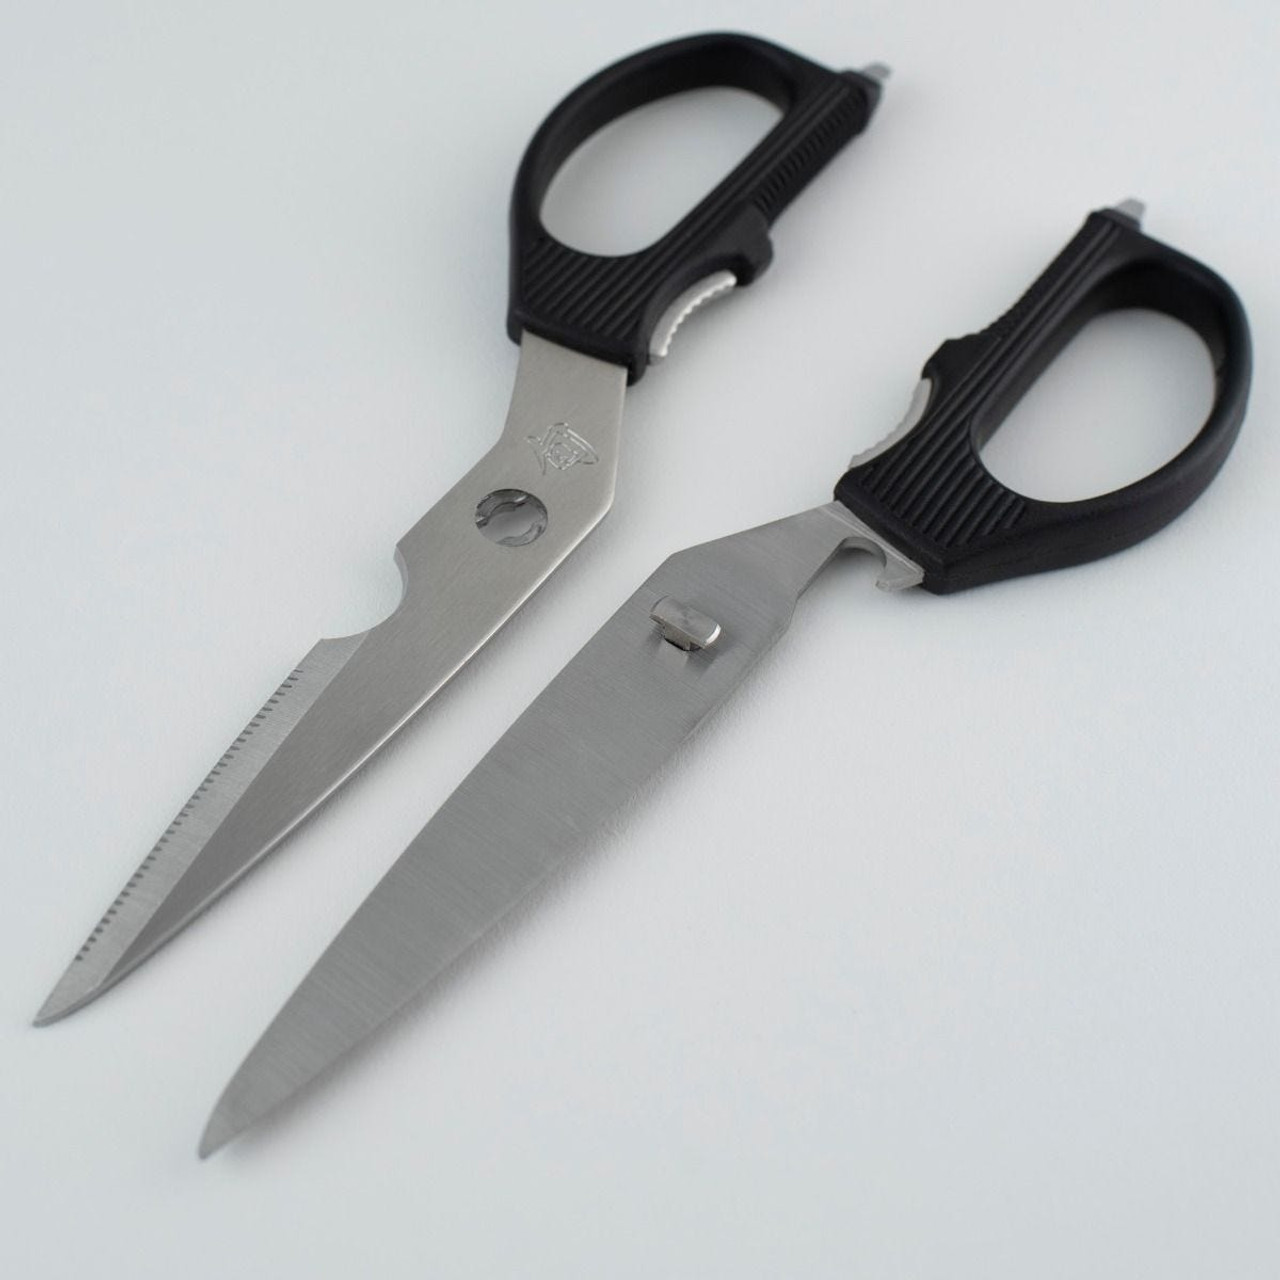 Shun Cutlery Multi-Purpose Kitchen Shears (DM7300) 4" 420J2 Stainless Steel Blades, black Polymer Handles